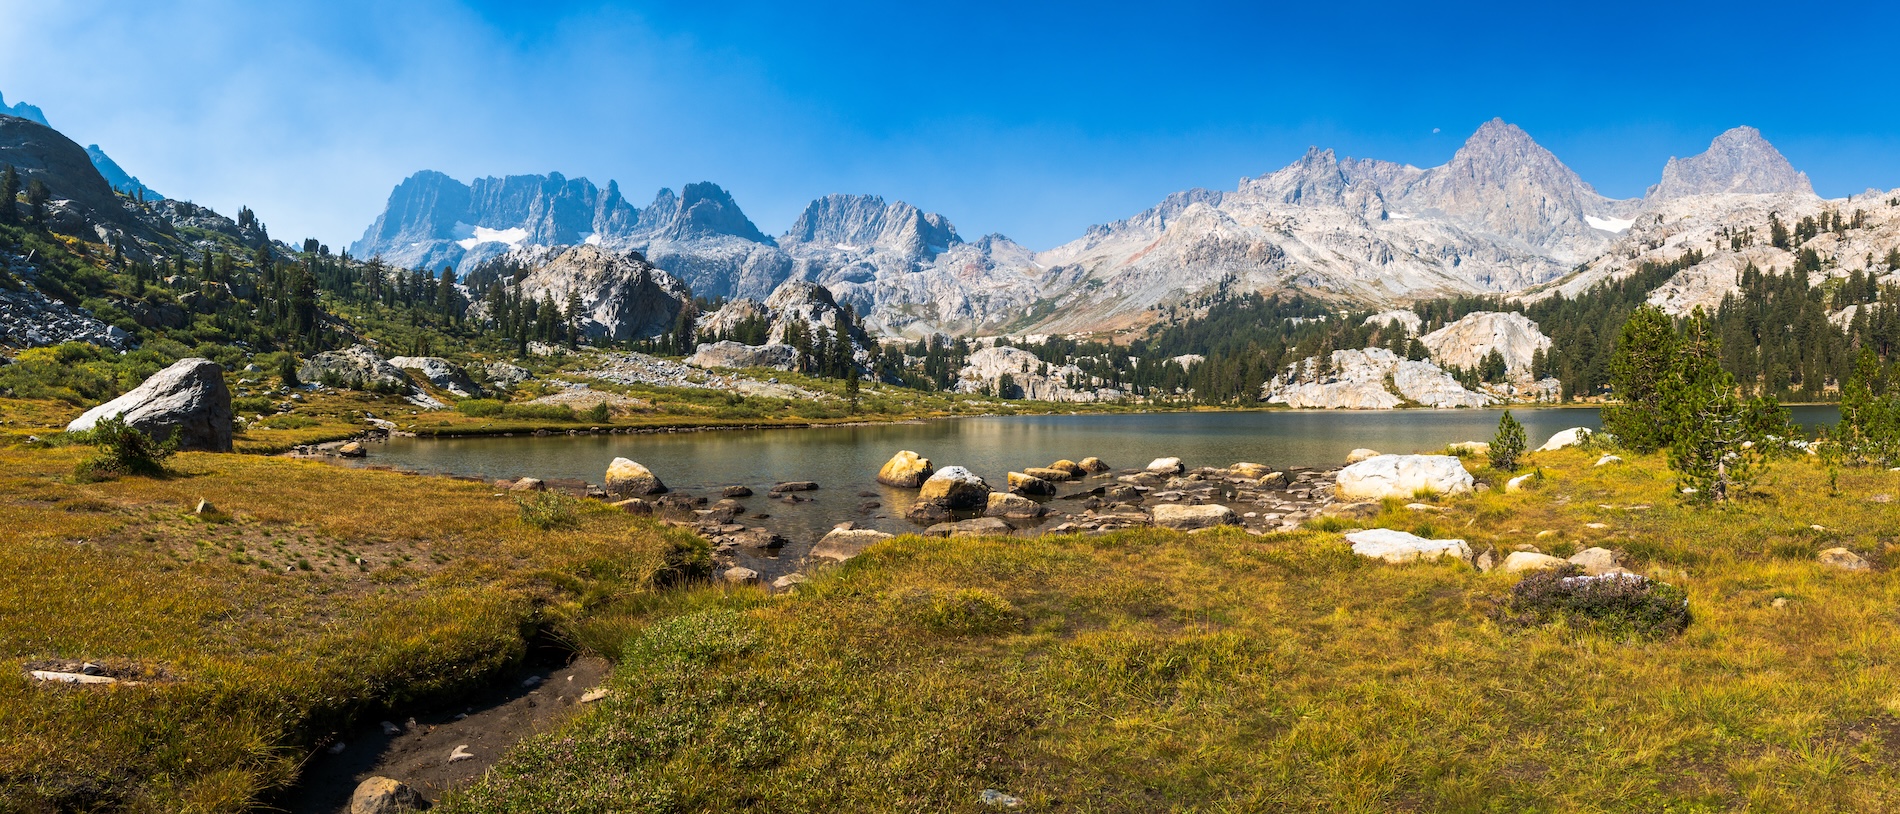 Panoramic shot of Ediza Lake in the Sierras. Photo by Brock Dallman